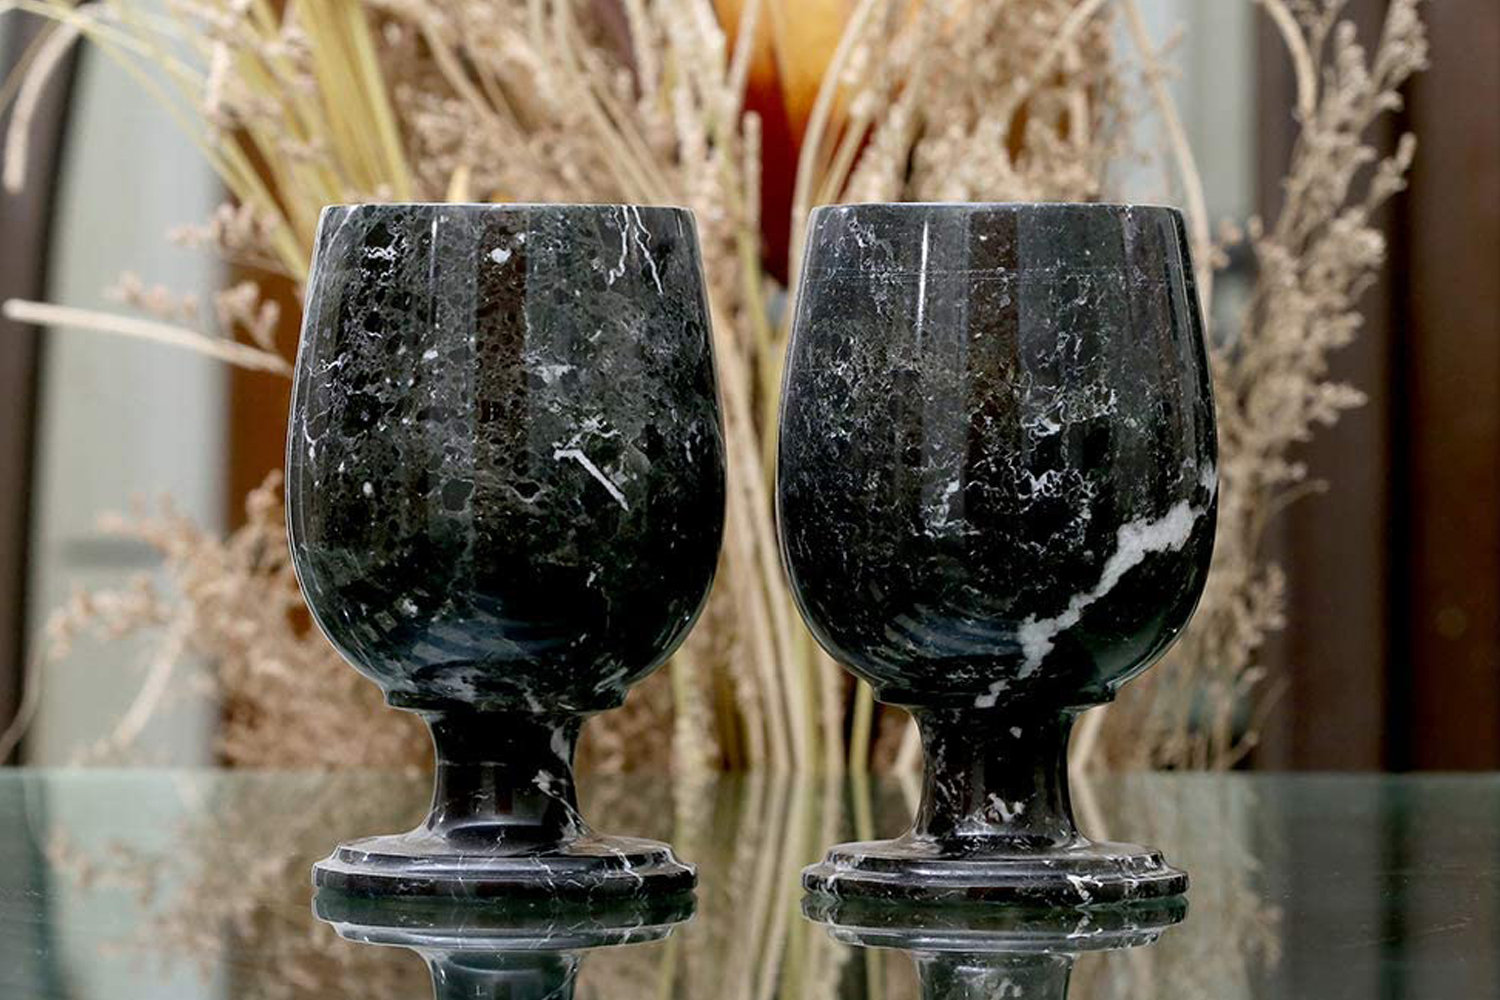 Studio Crystal by Godinger Wine Glasses 